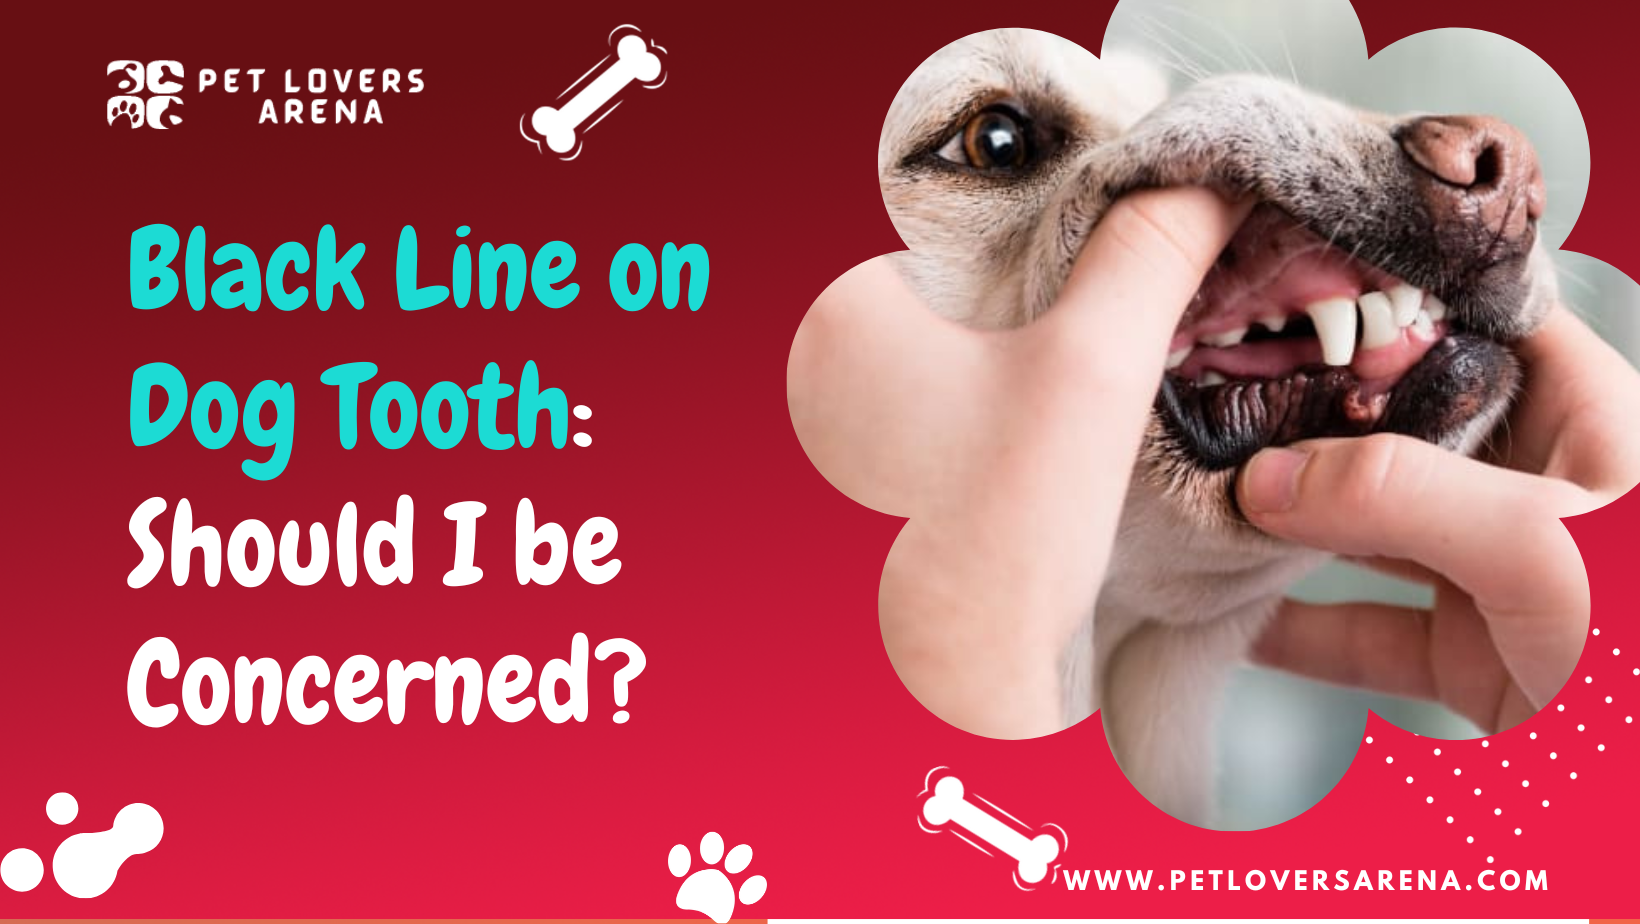 Black Line on Dog Tooth